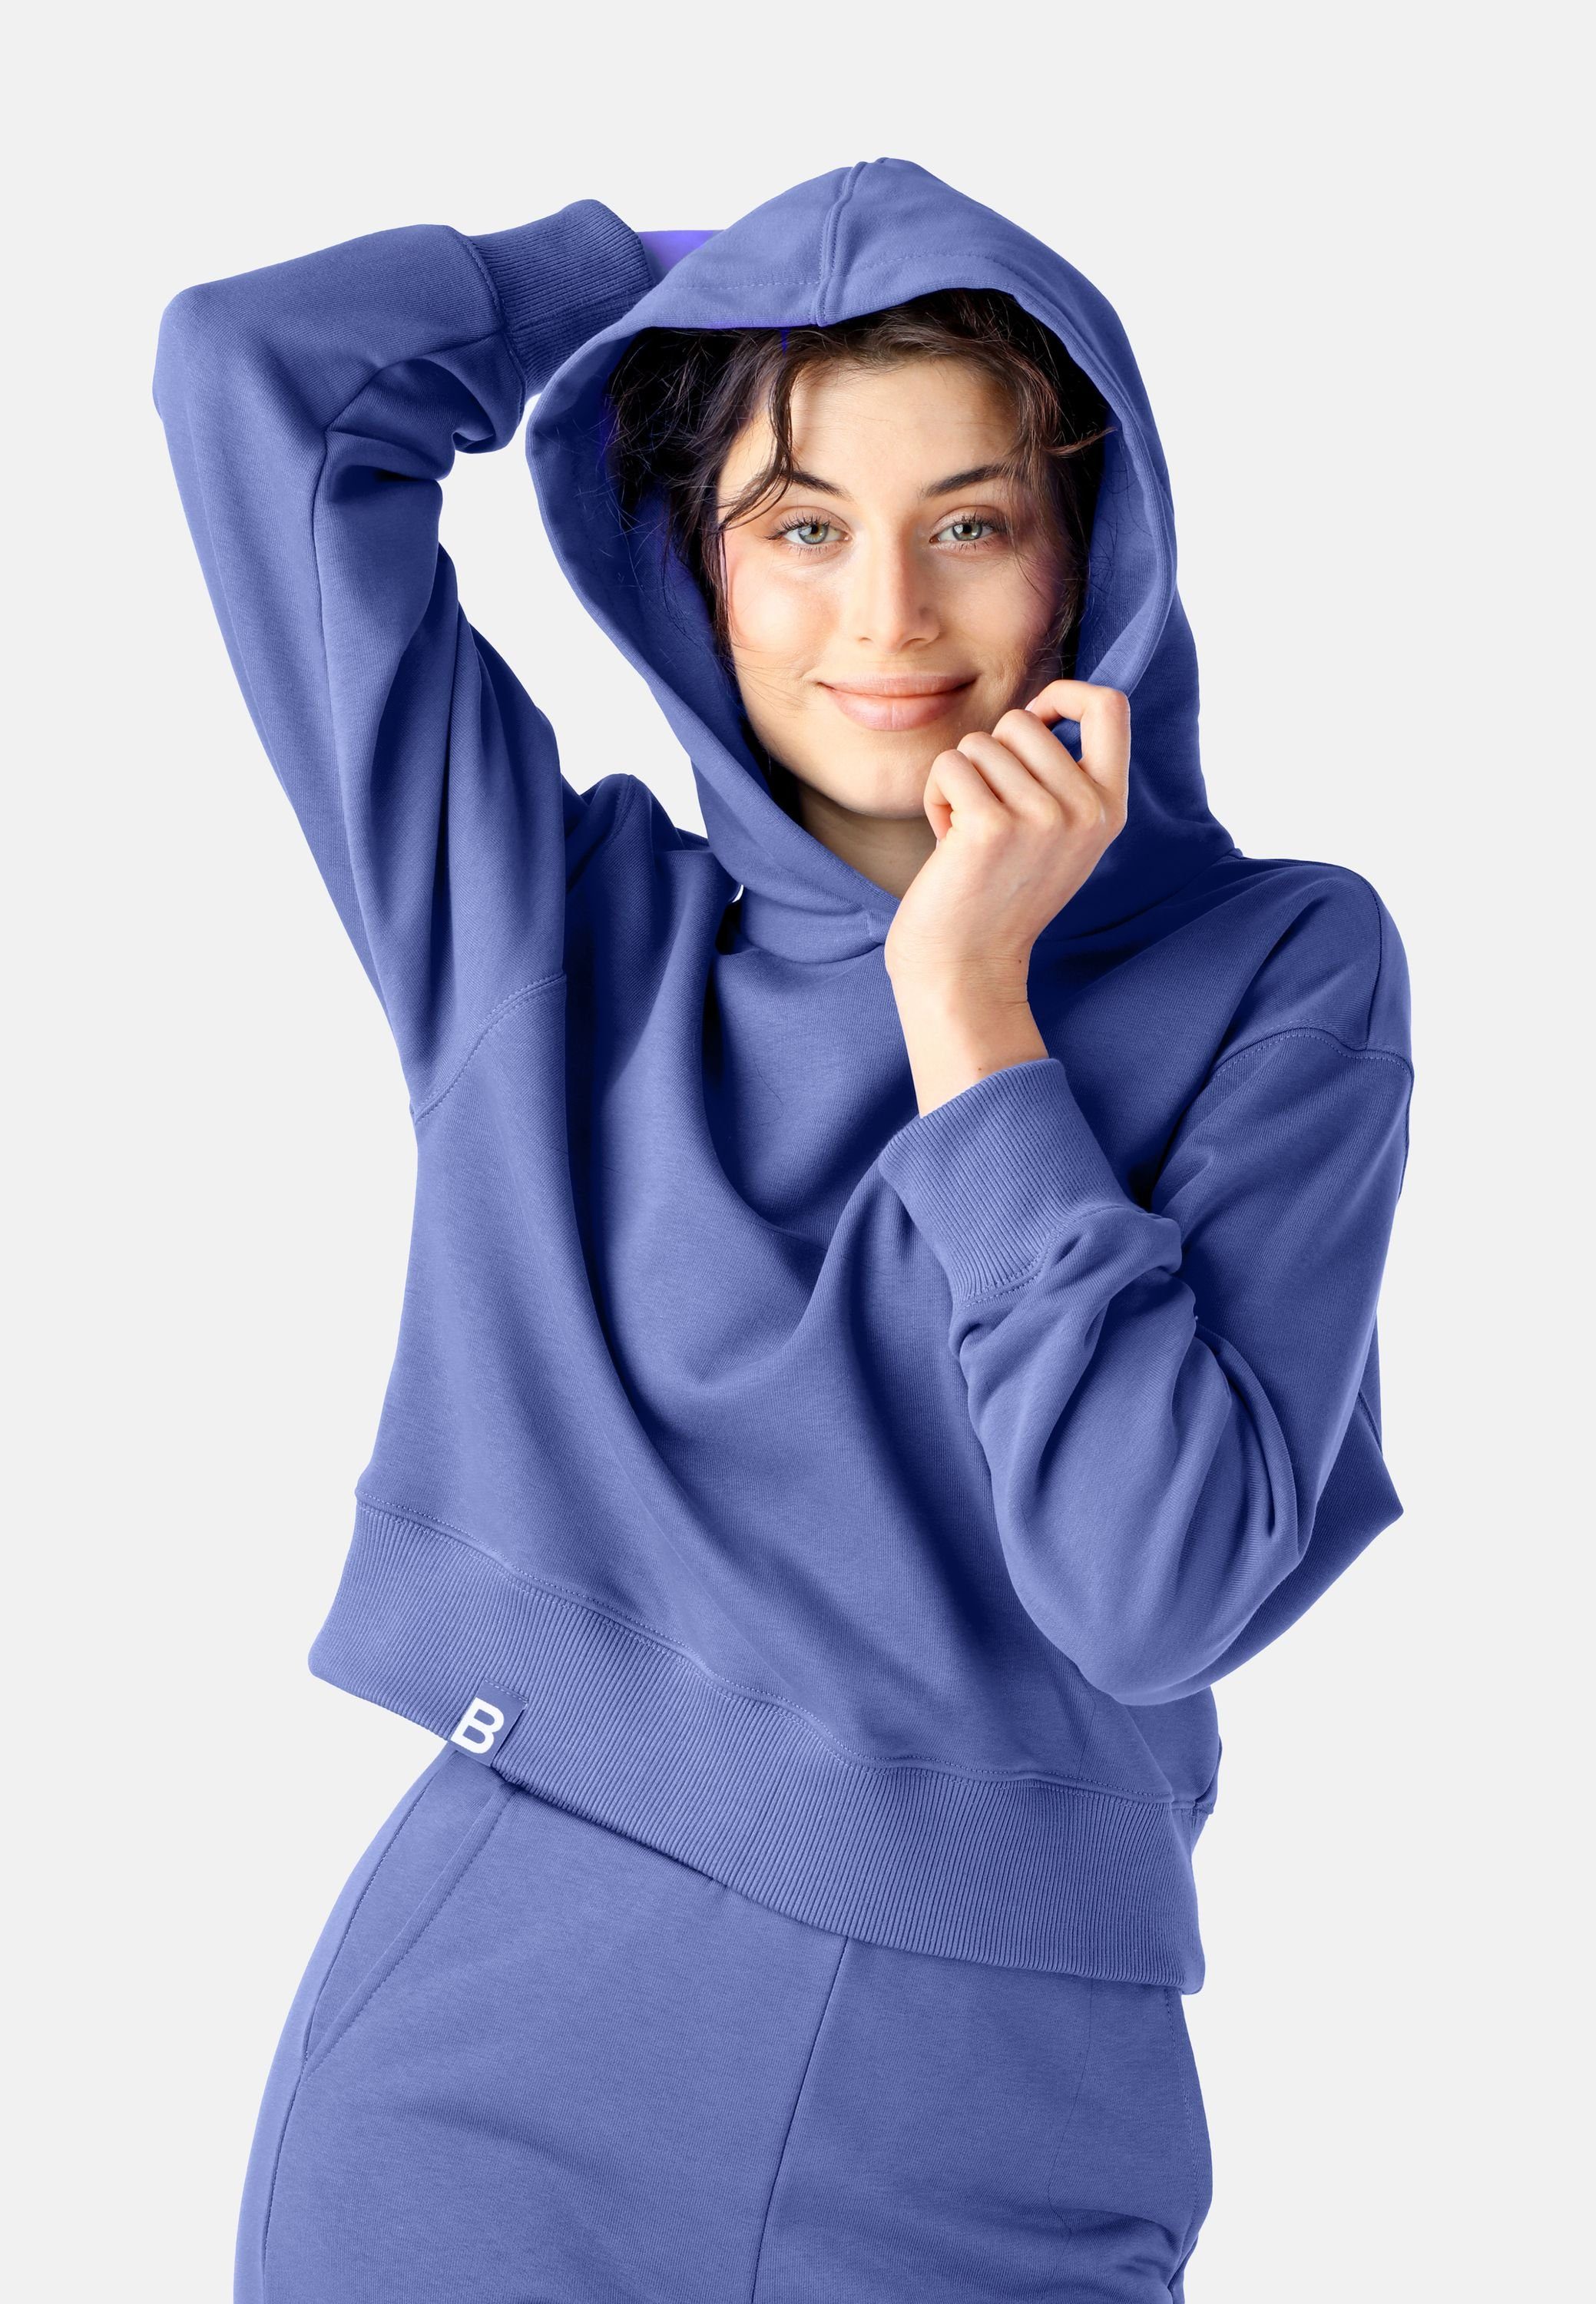 Bellivalini Kapuzensweatshirt Kapuzenpullover BLV208 Oberteil Pullover Damen Lila-blau Jogging Sportanzug kurz